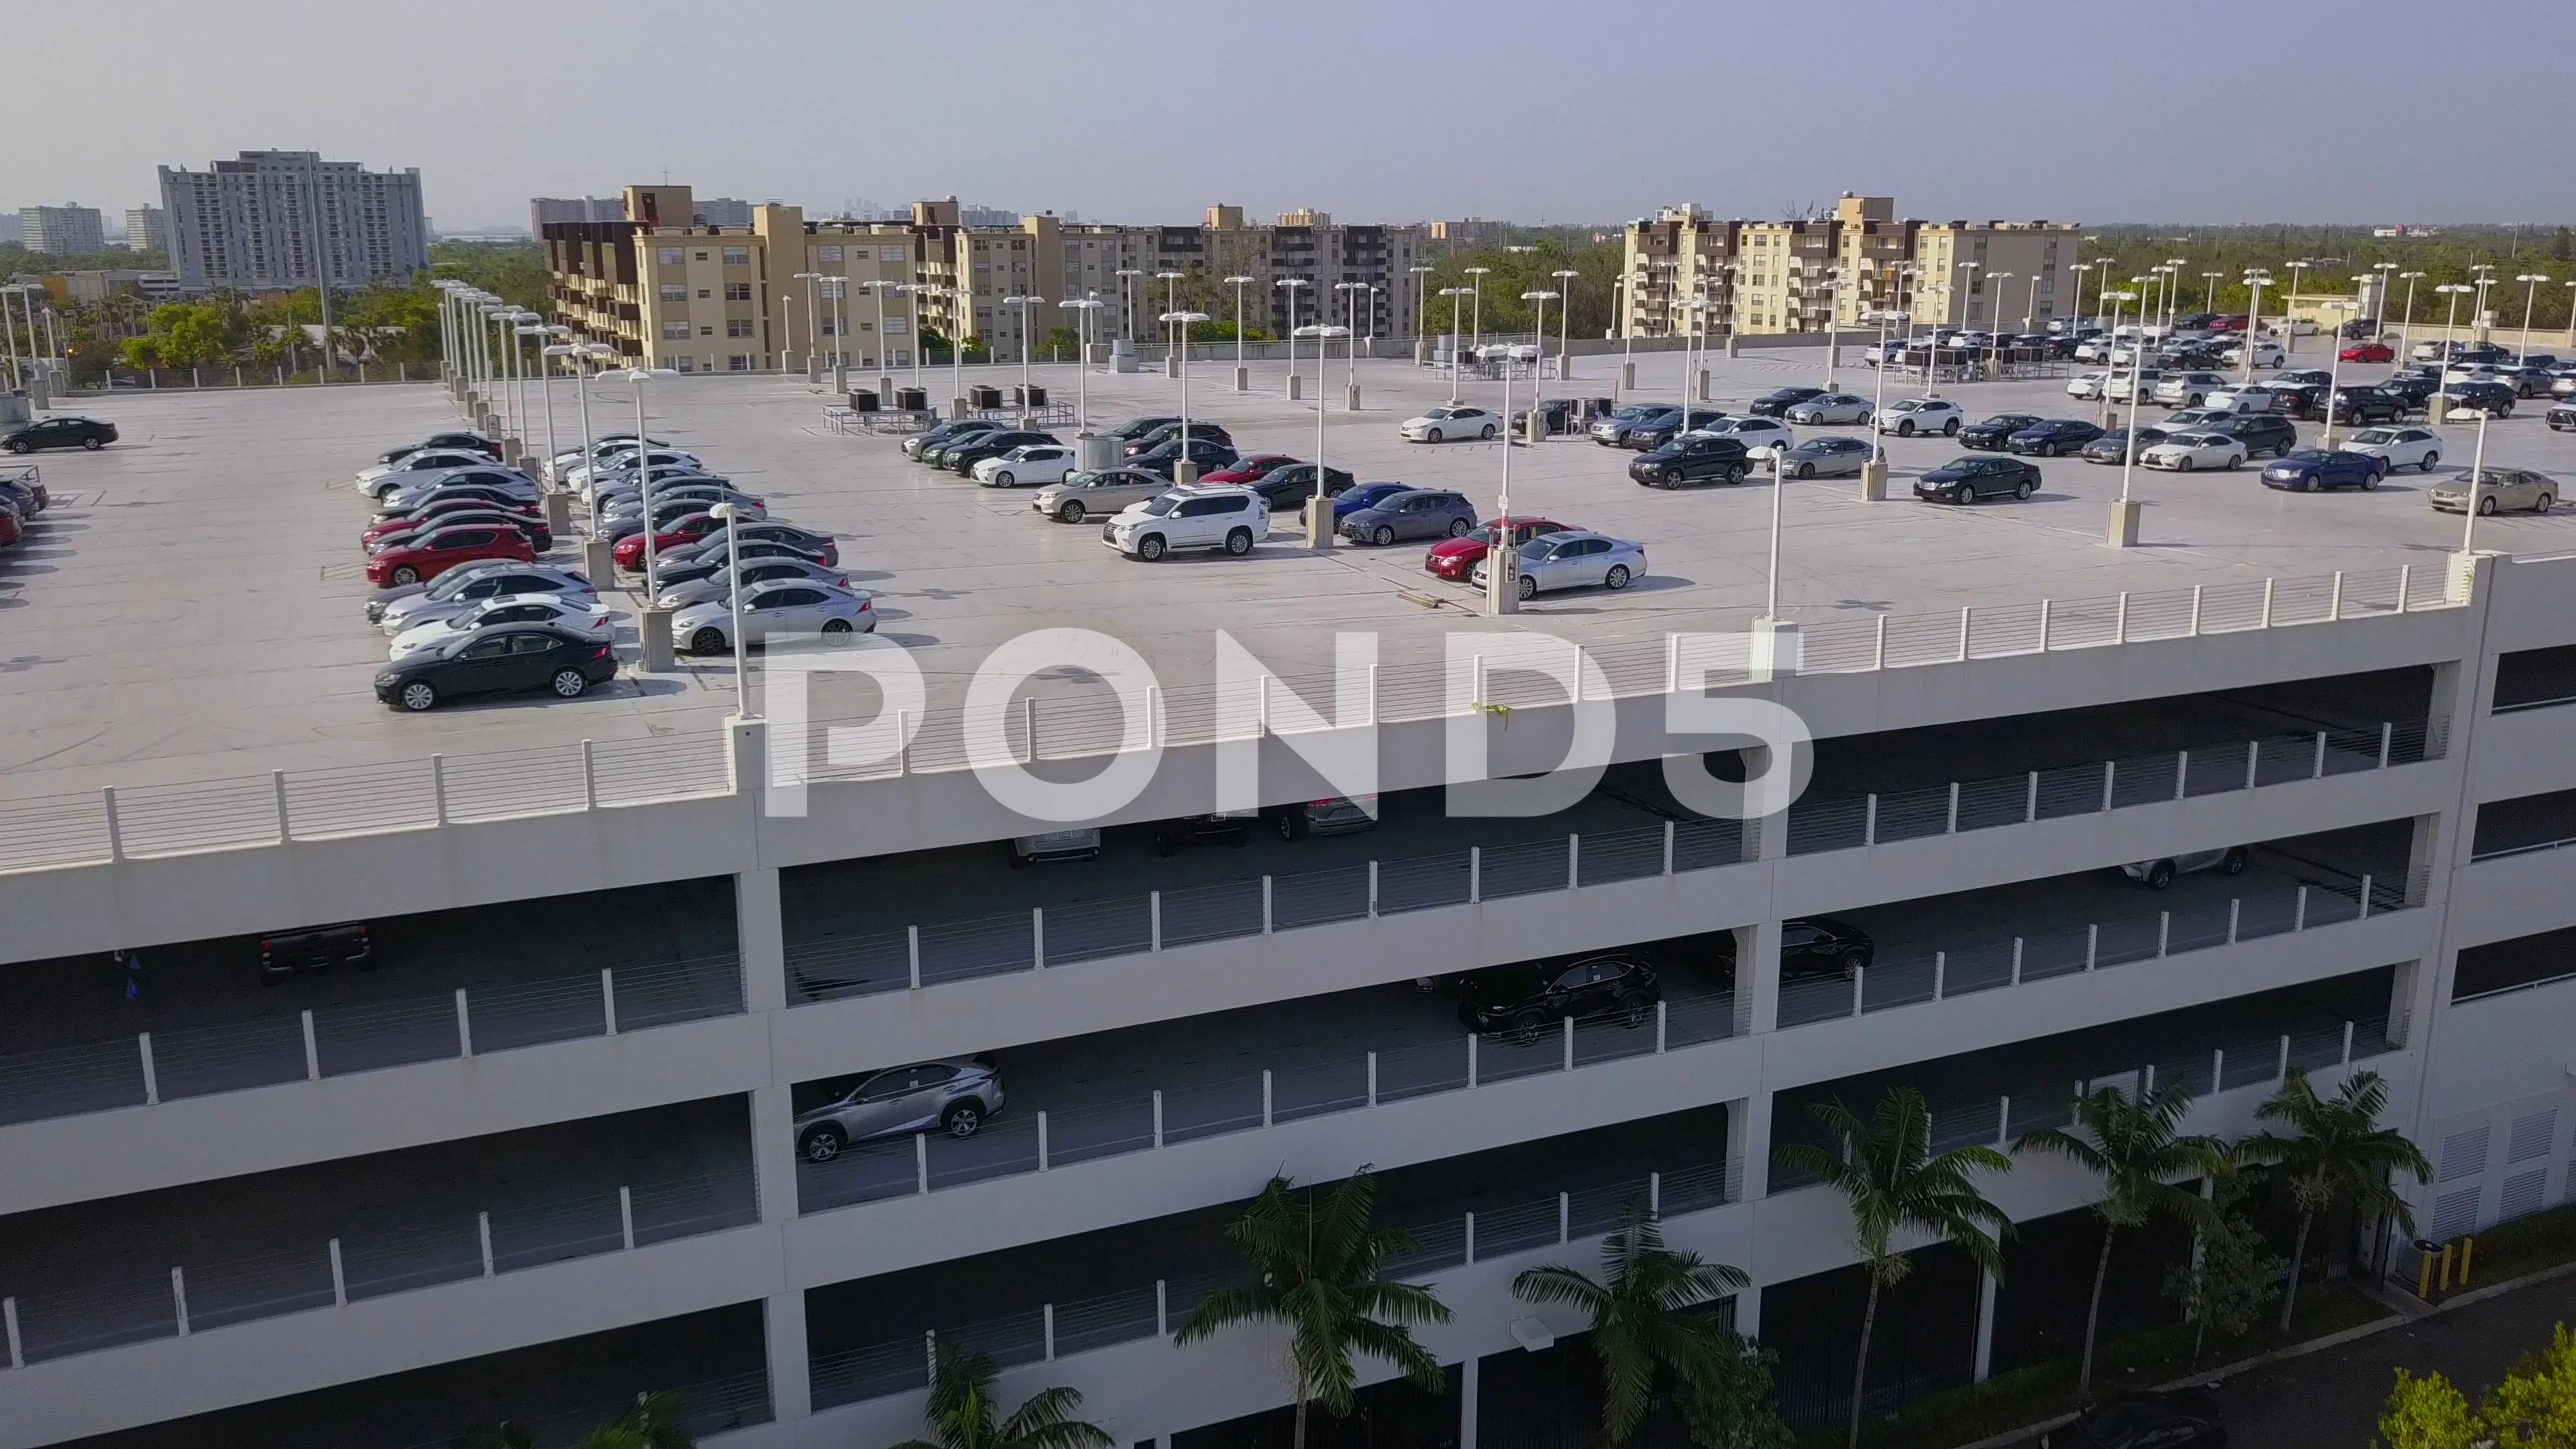 mangel Have en picnic boksning Rooftop parking lot drone aerial video | Stock Video | Pond5